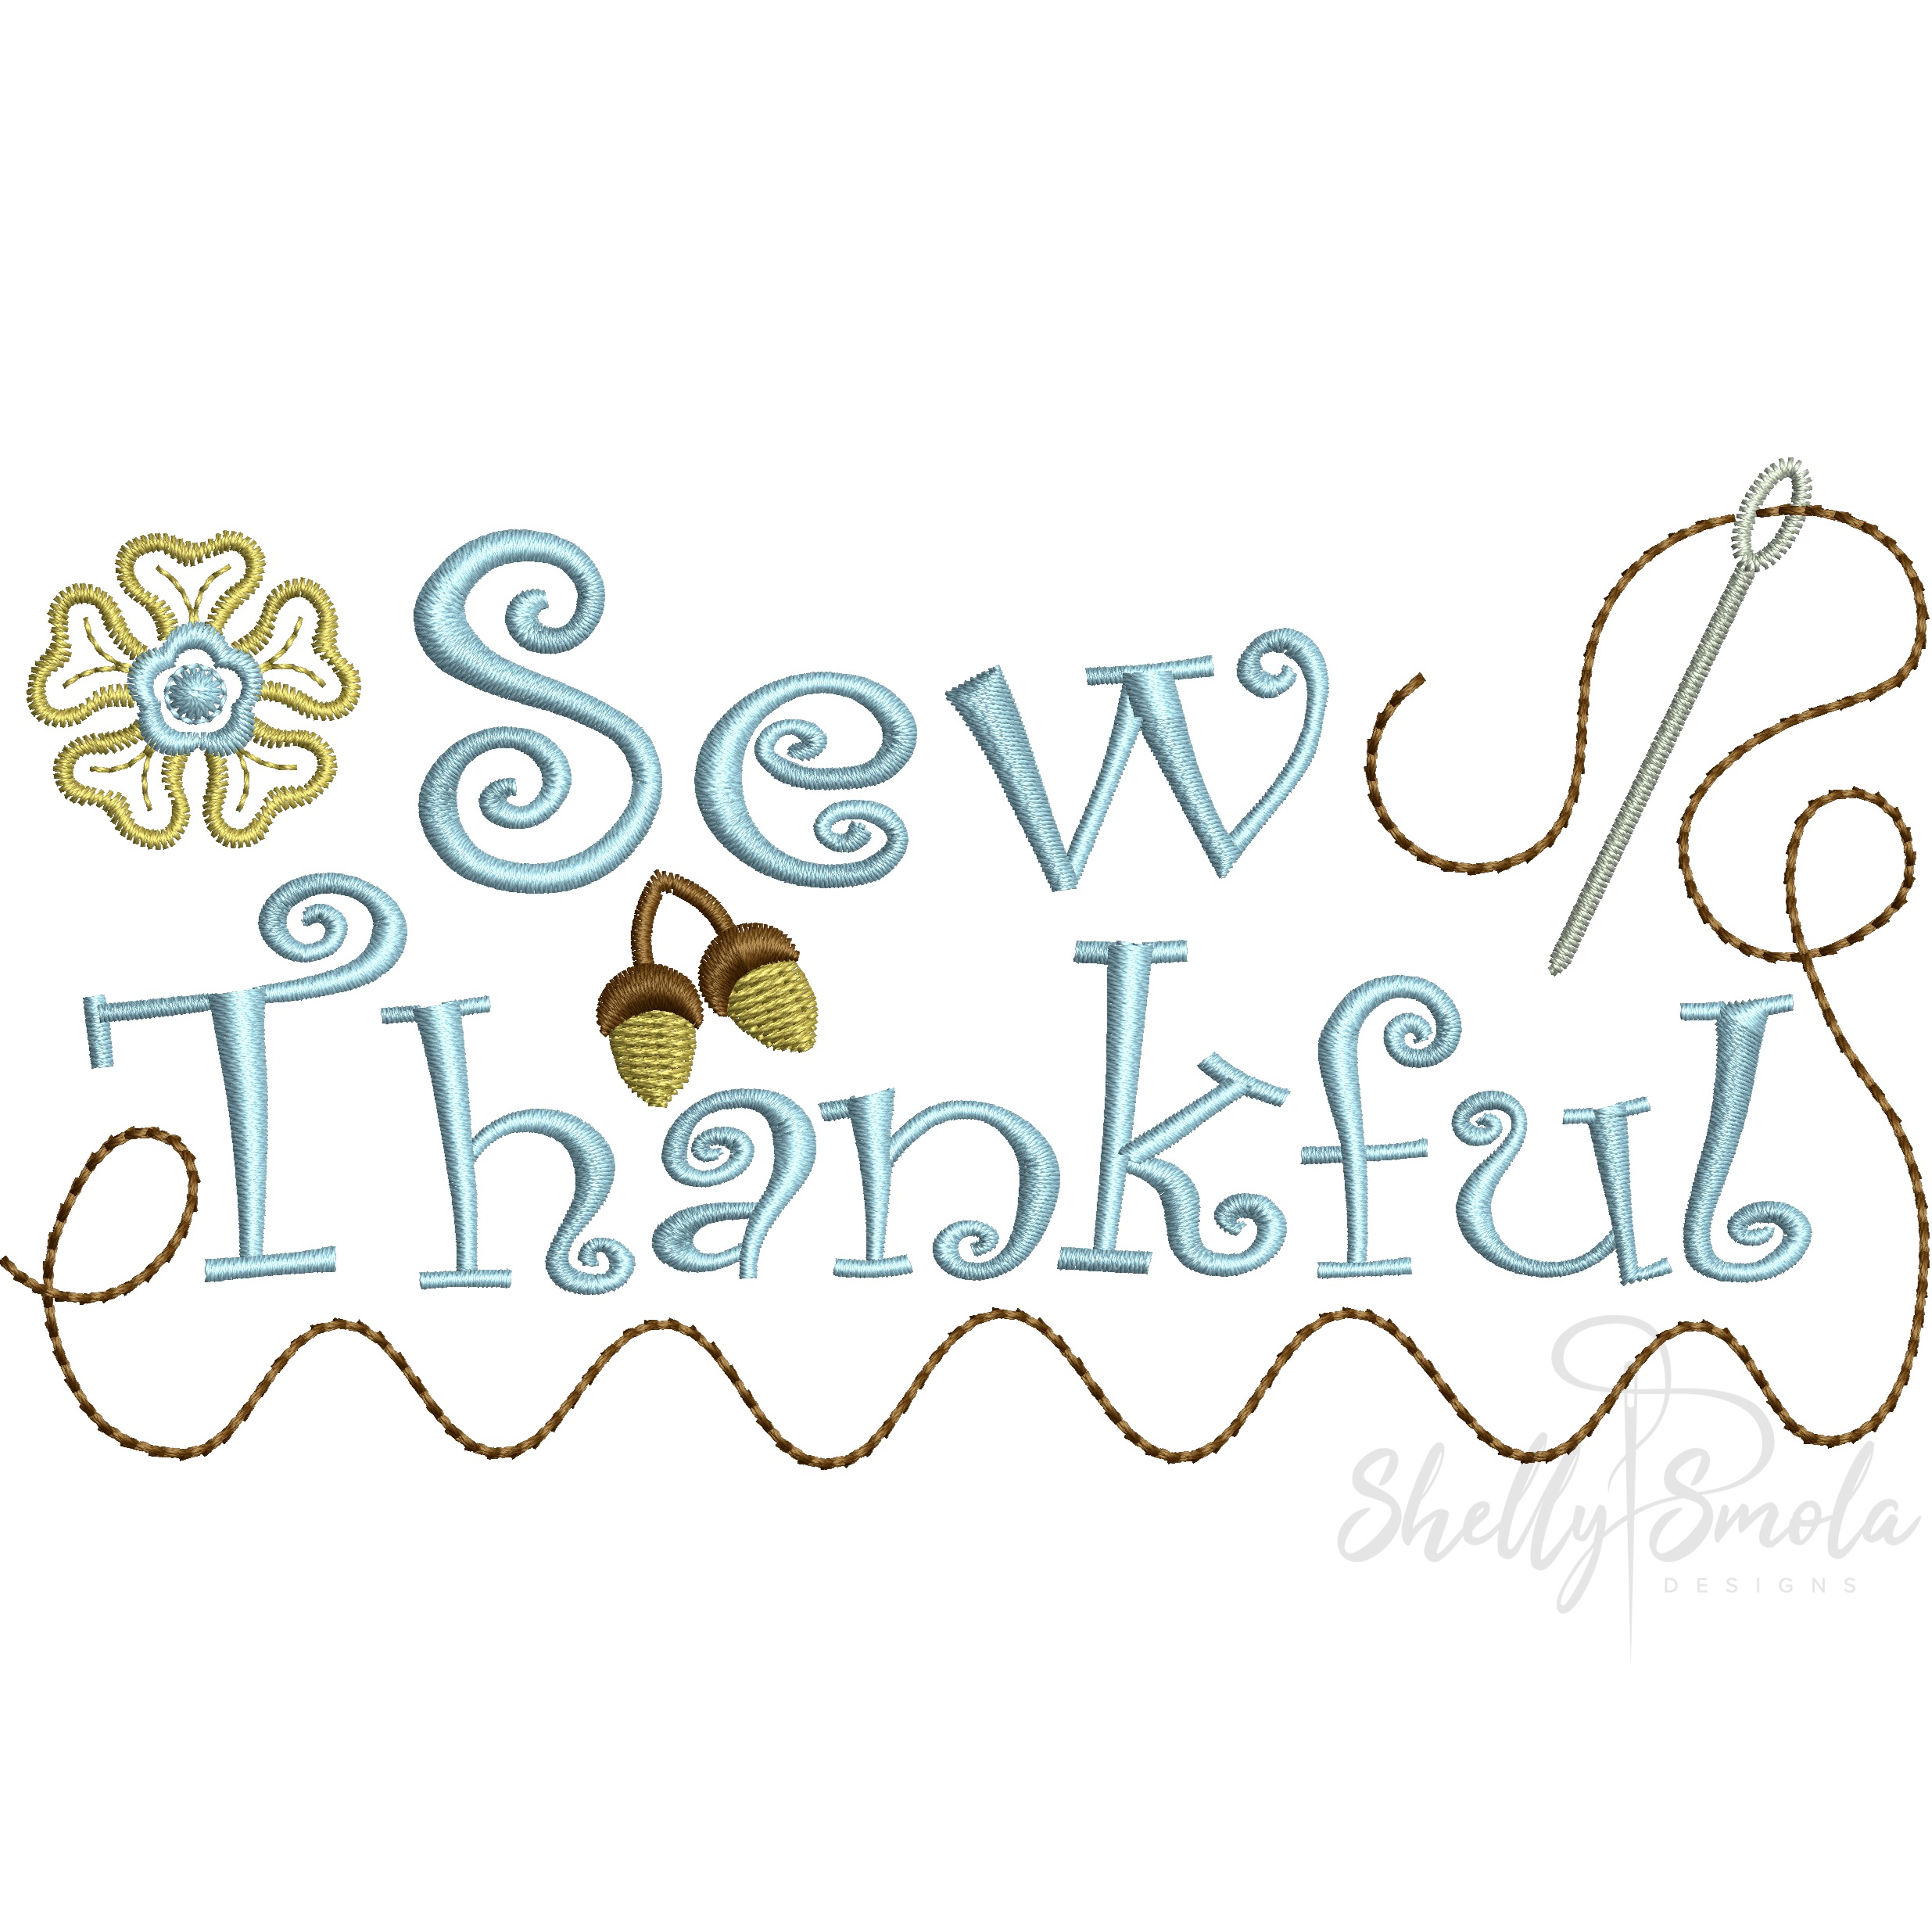 Sew Thankful by Shelly Smola